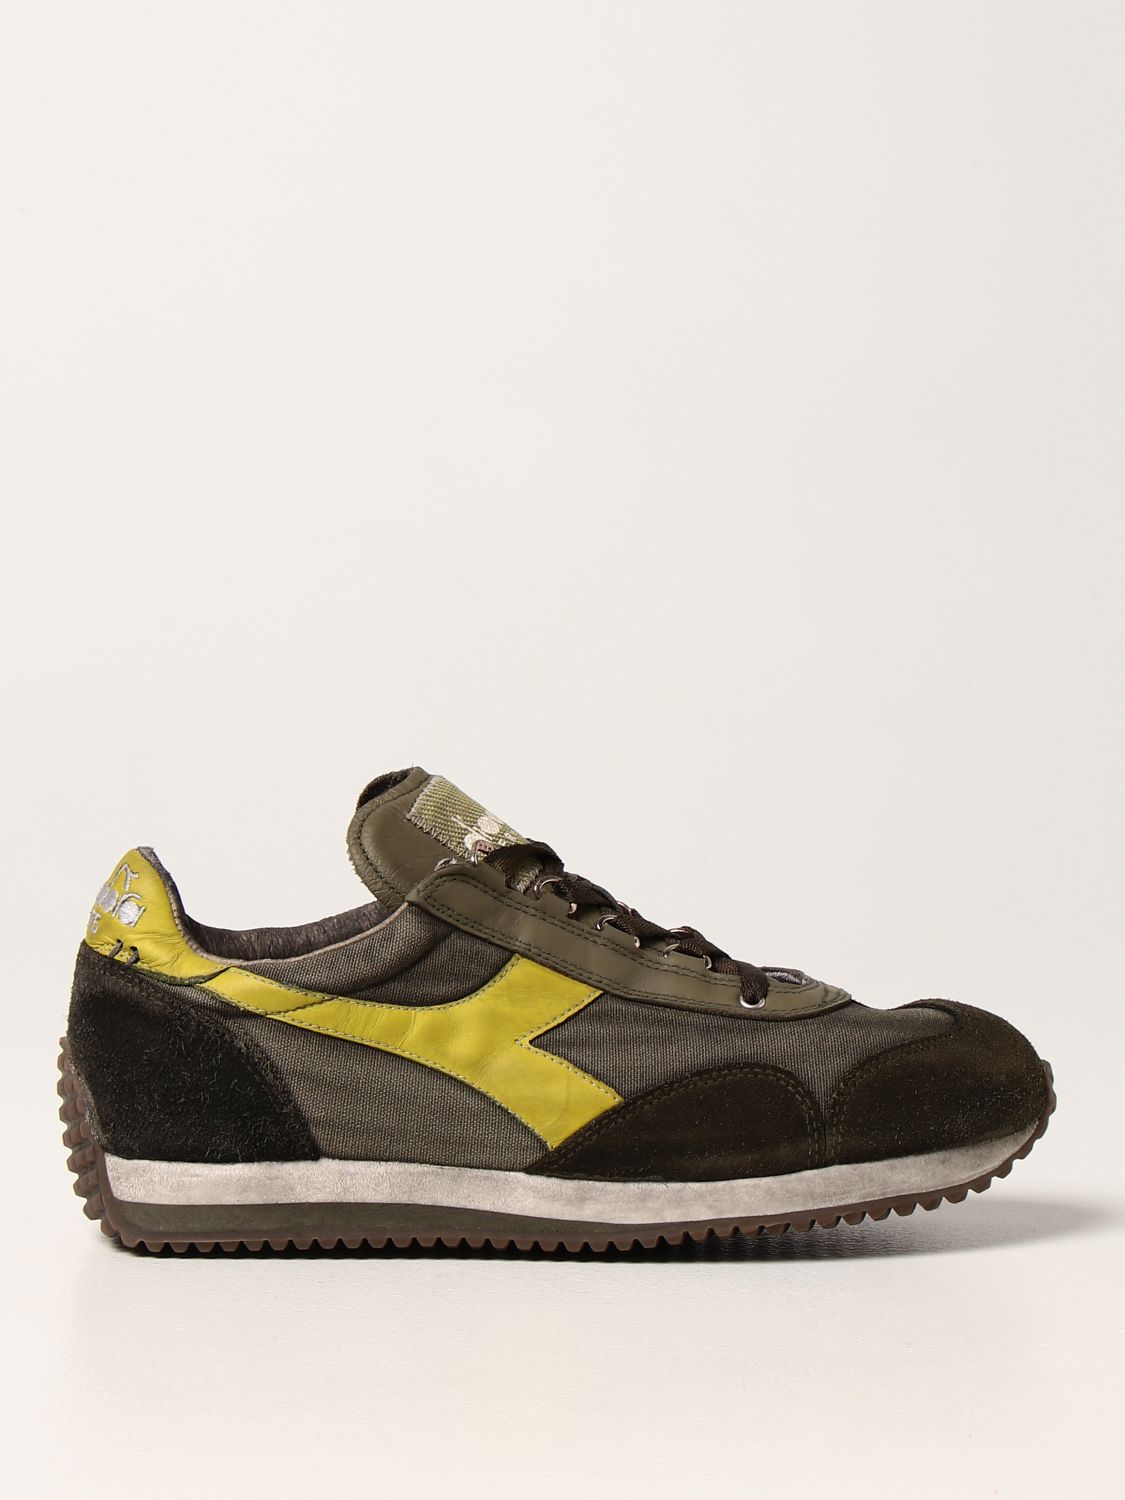 DIADORA HERITAGE: Equipe sneakers in nubuck - Olive | Diadora Heritage sneakers 201174736 online on